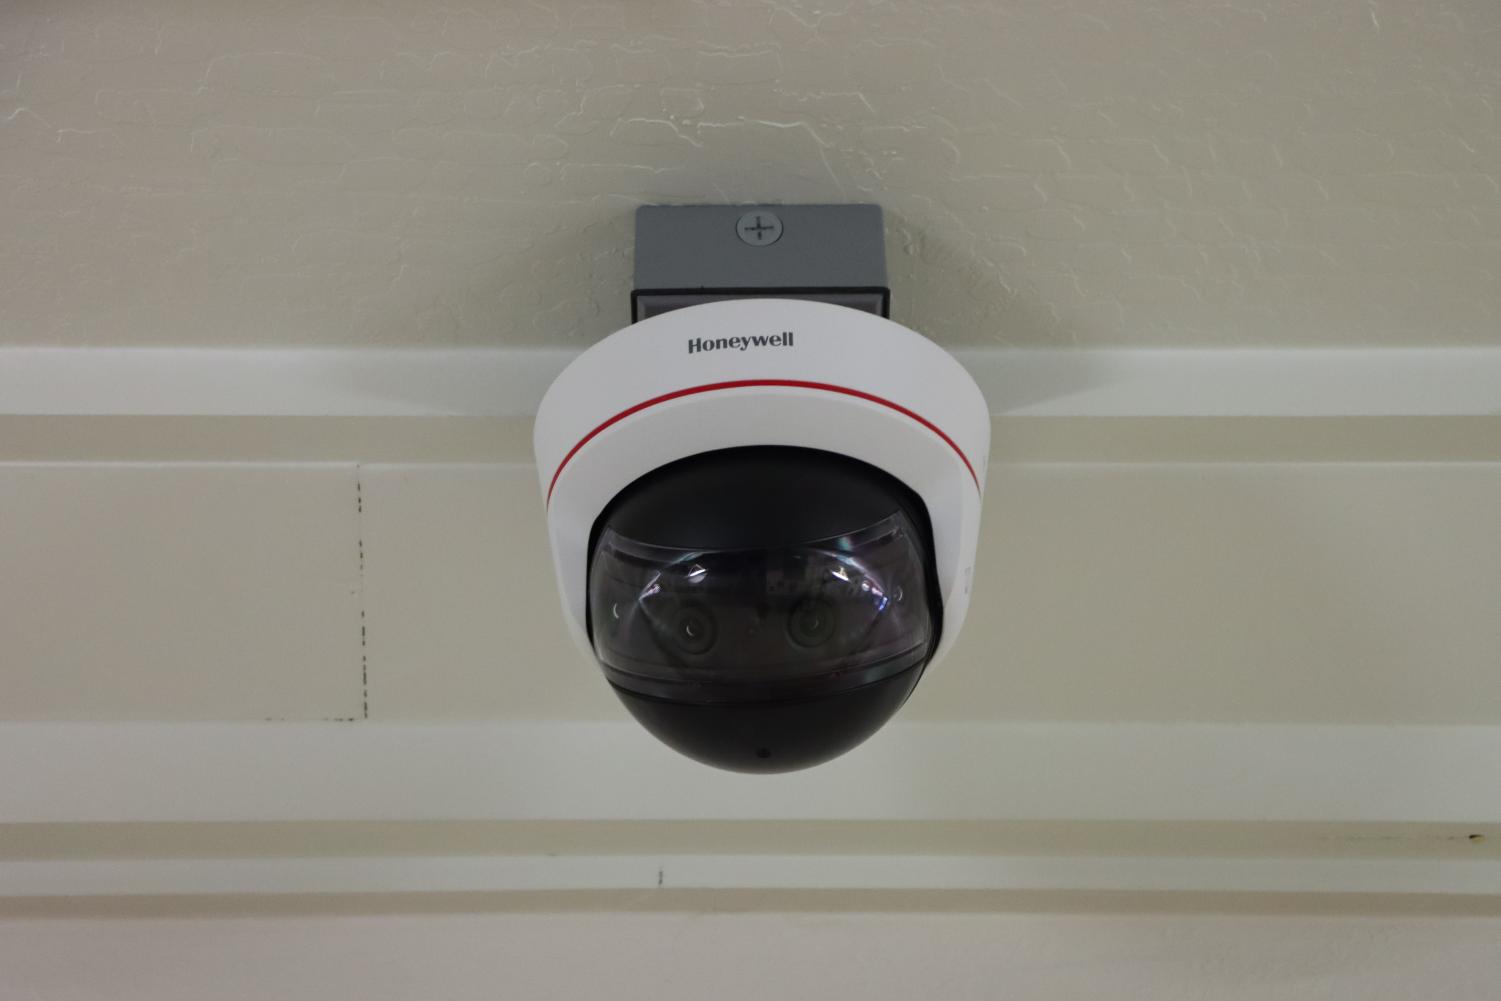 Anti-vandalism surveilliance camera